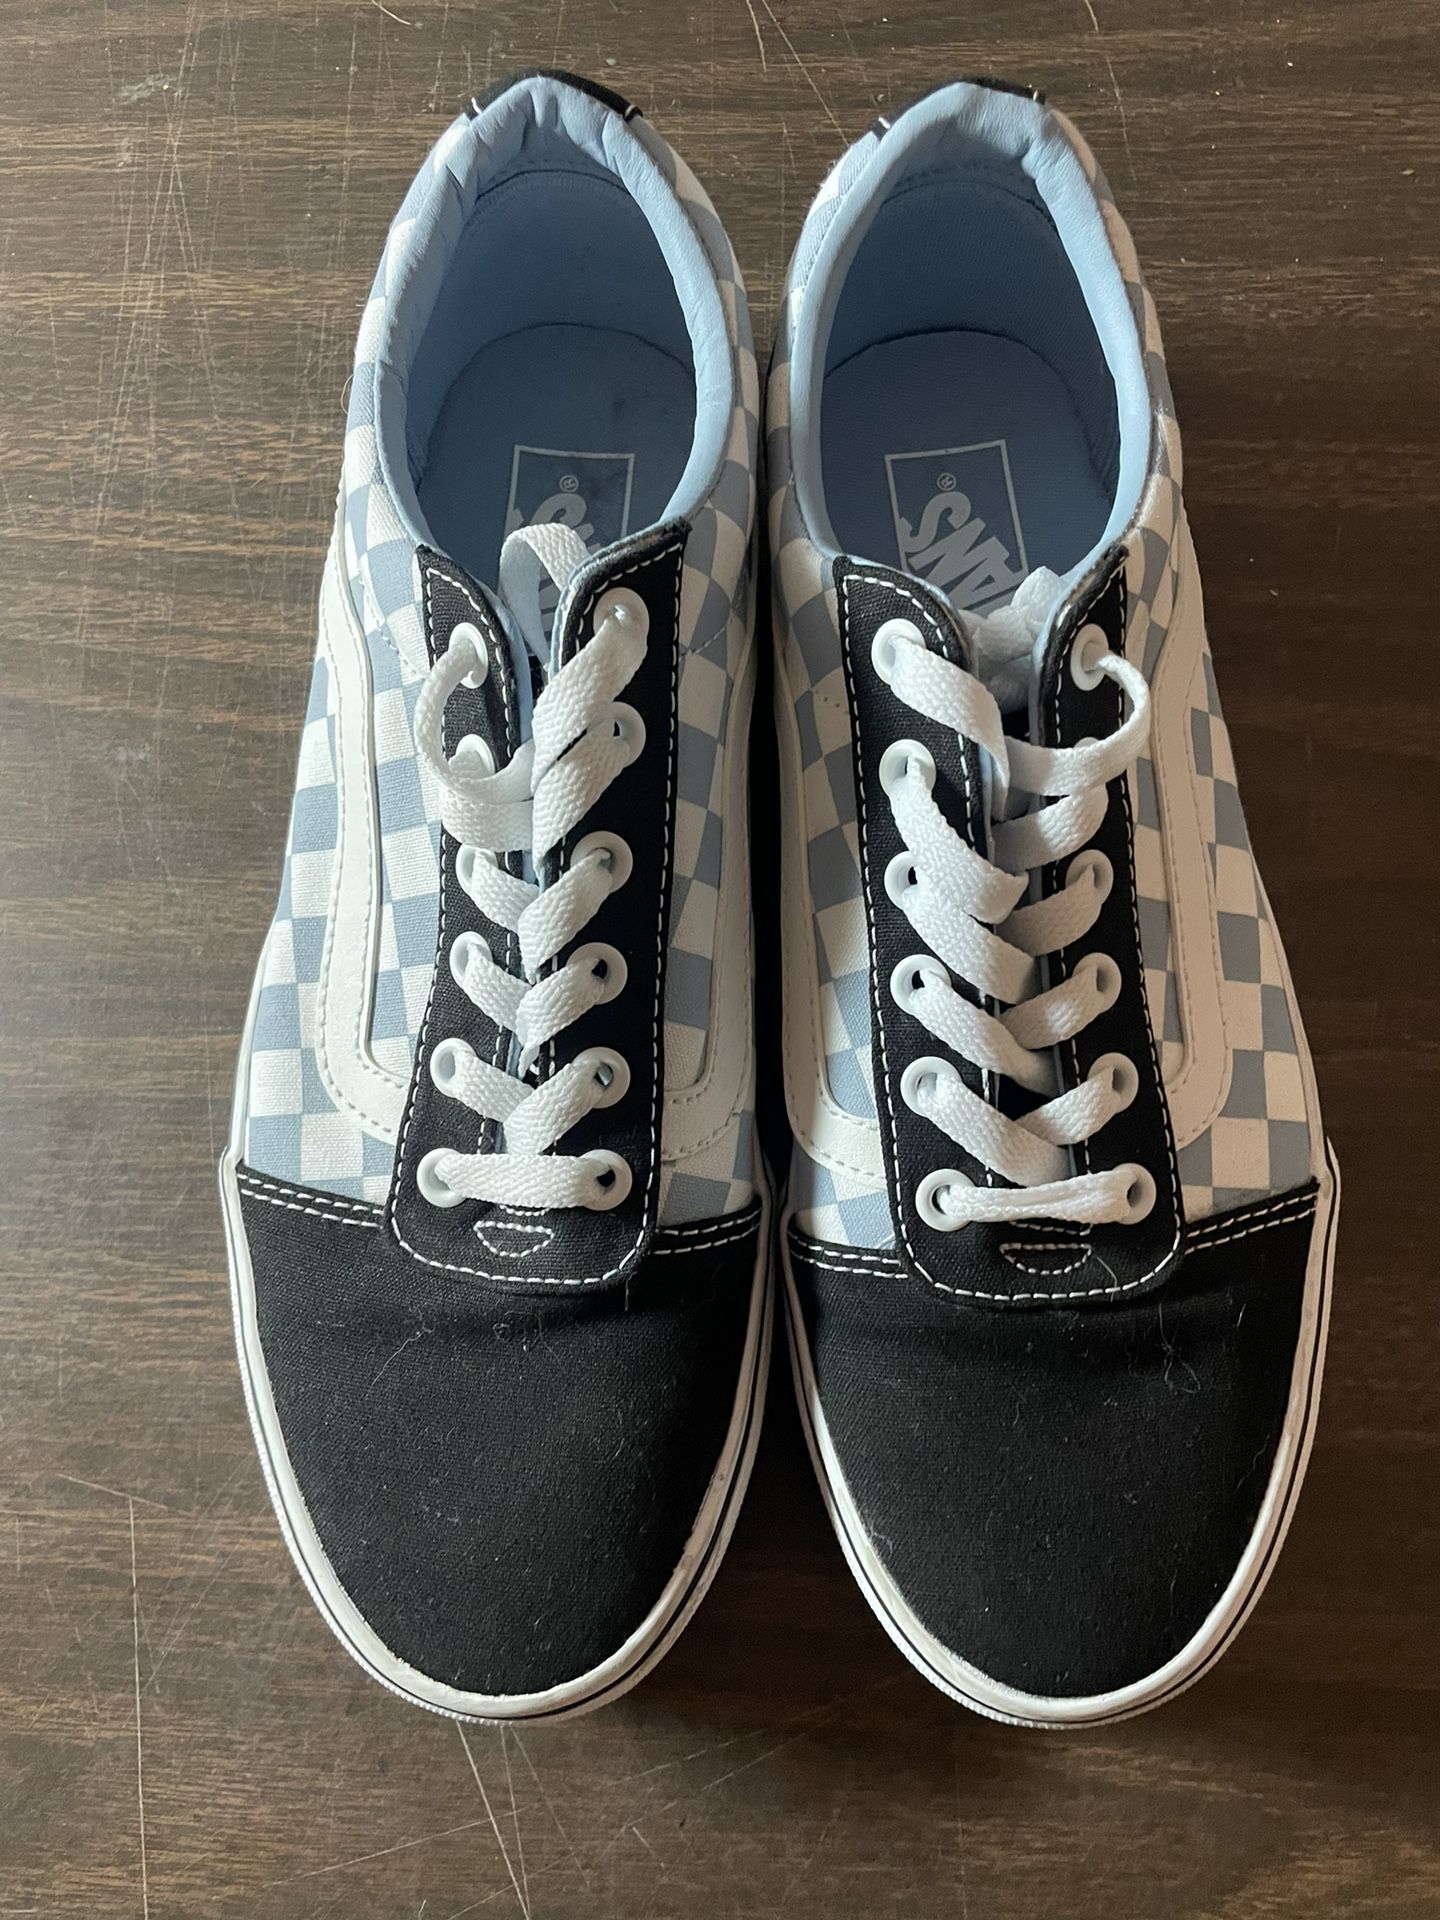 Vans Old Skool Checkerboard Skate Shoes blue & White black  Women 9.5  #500714